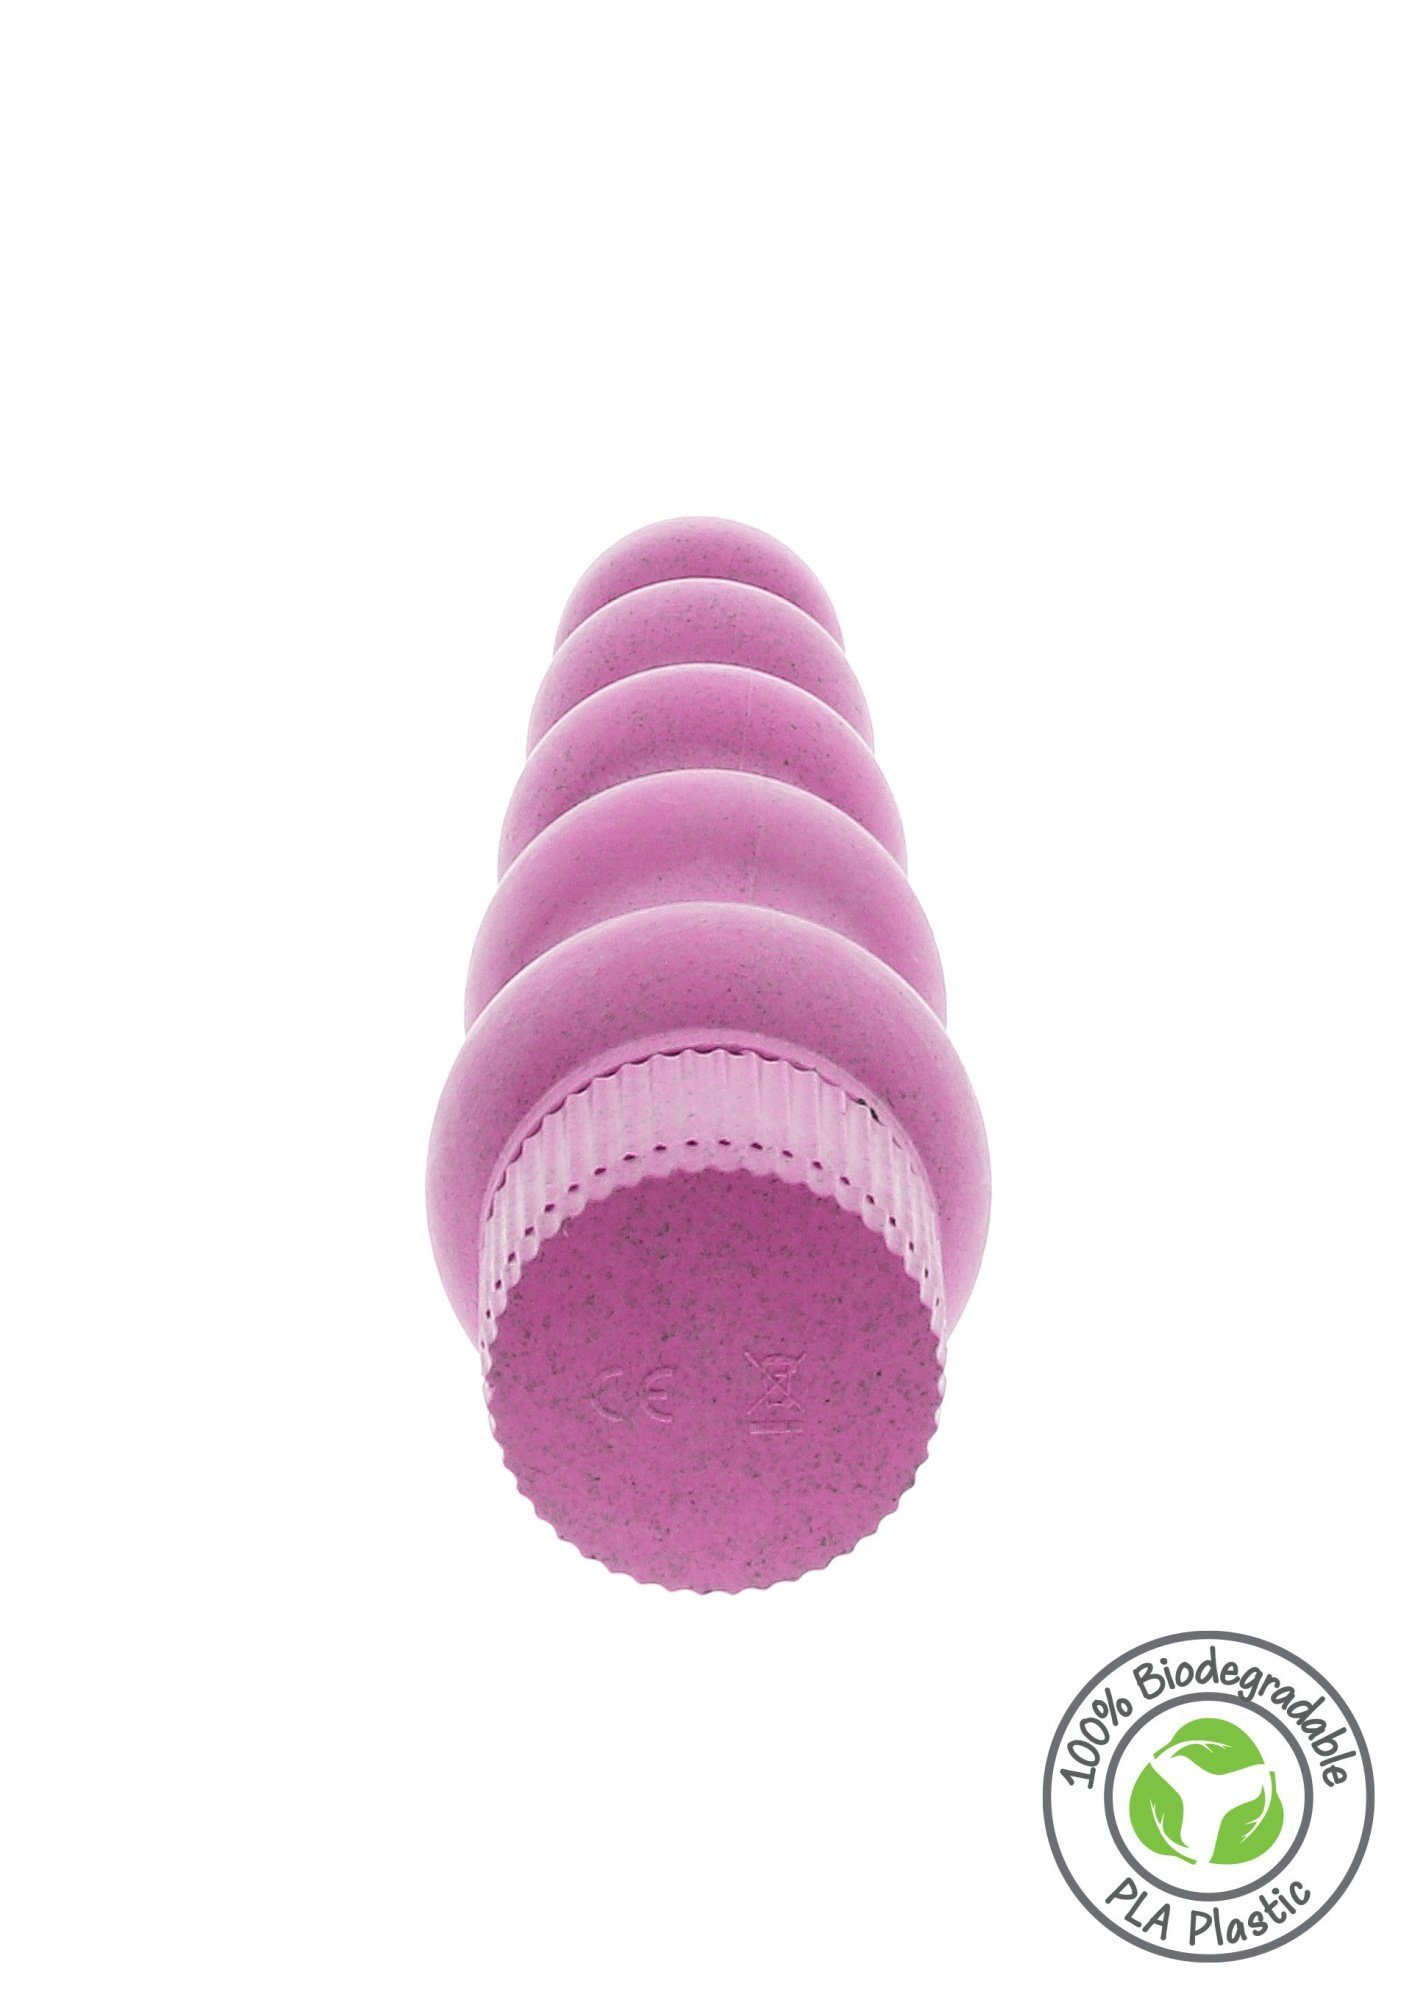 Vibrator rosa GREEN - abbaubar vegan % Vibrator FUCK 100 biologisch